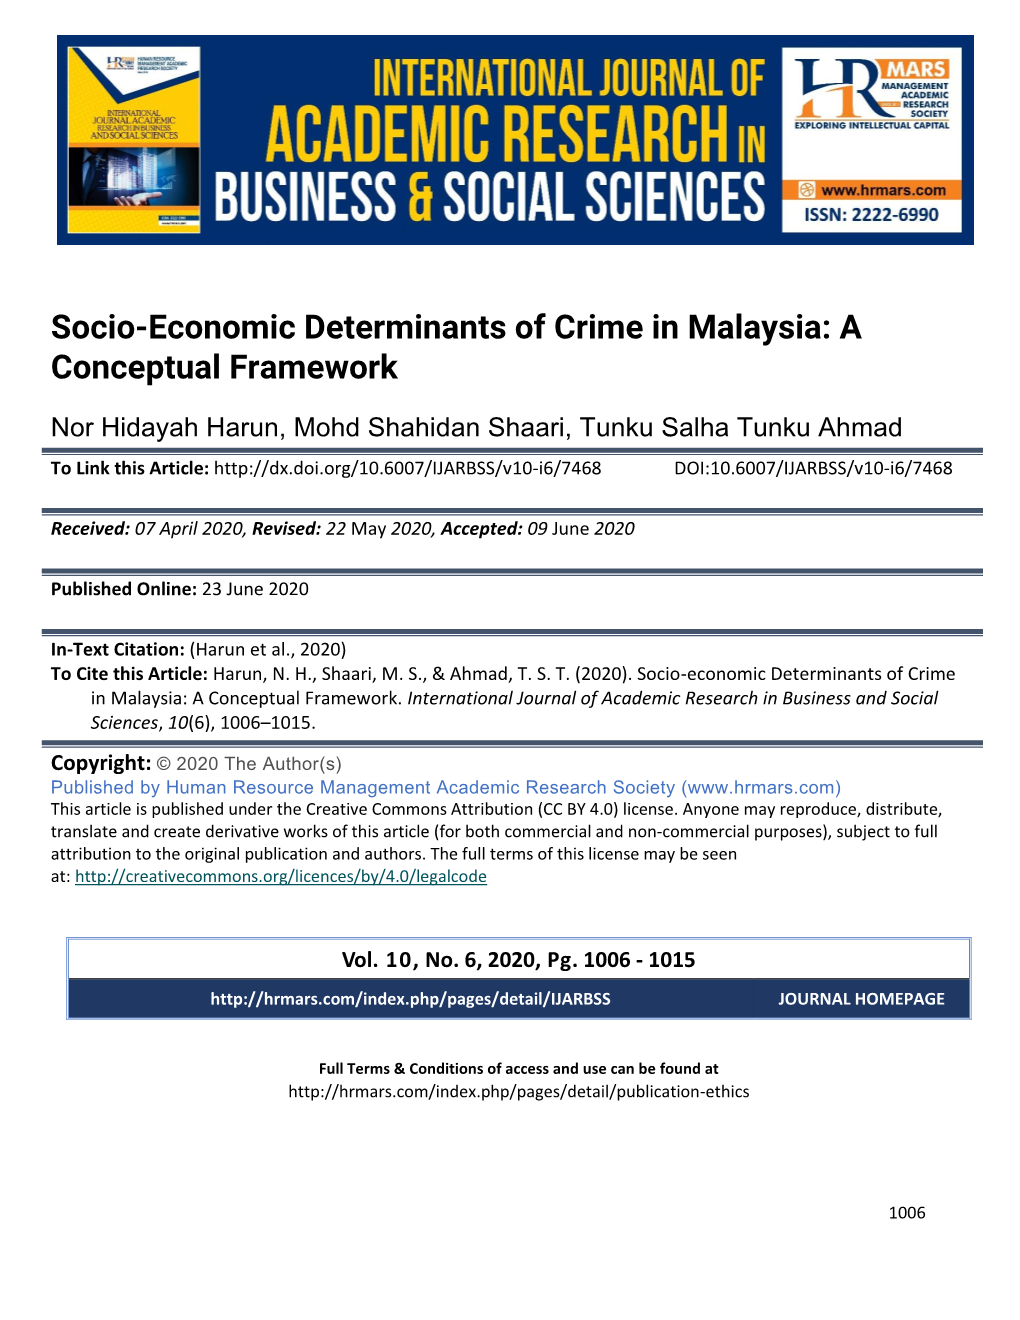 Socio-Economic Determinants of Crime in Malaysia: a Conceptual Framework